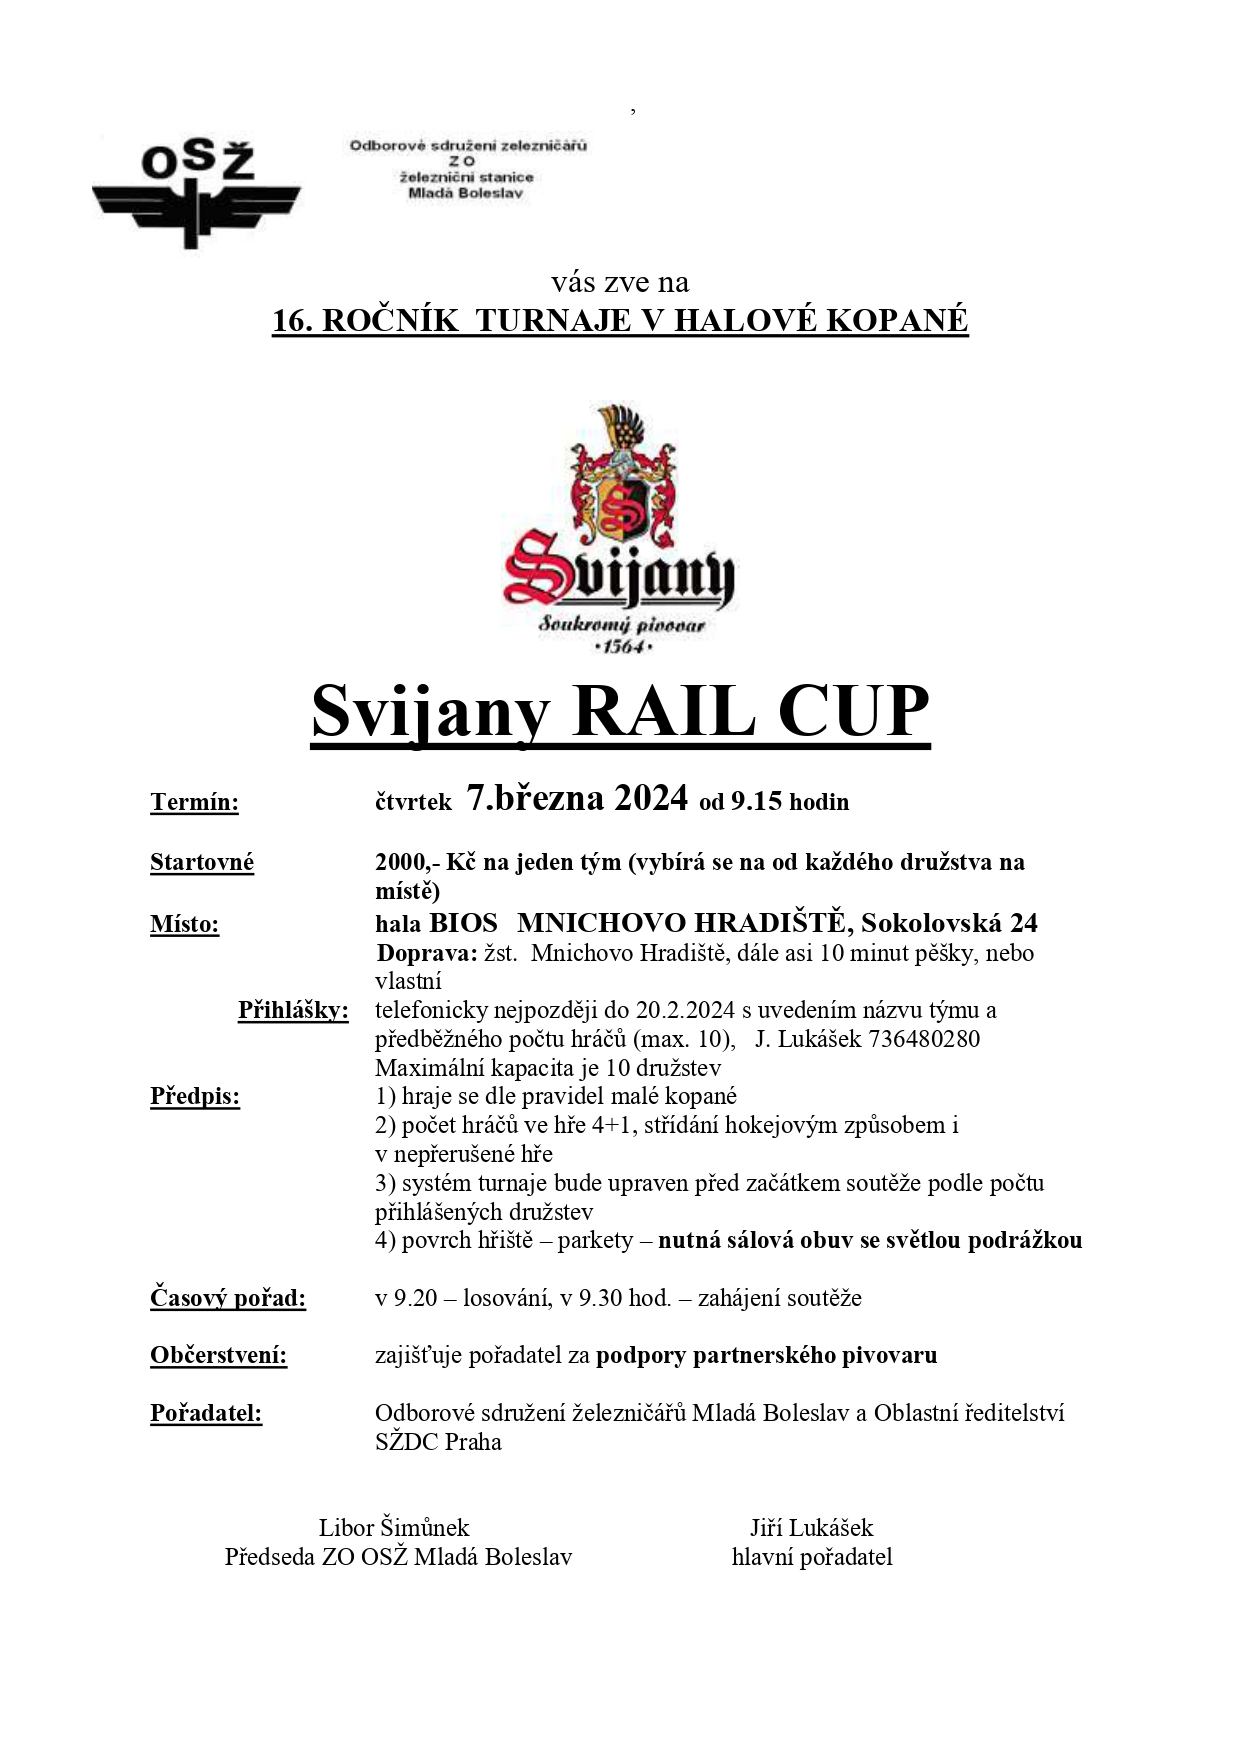 Svijany RAIL CUP